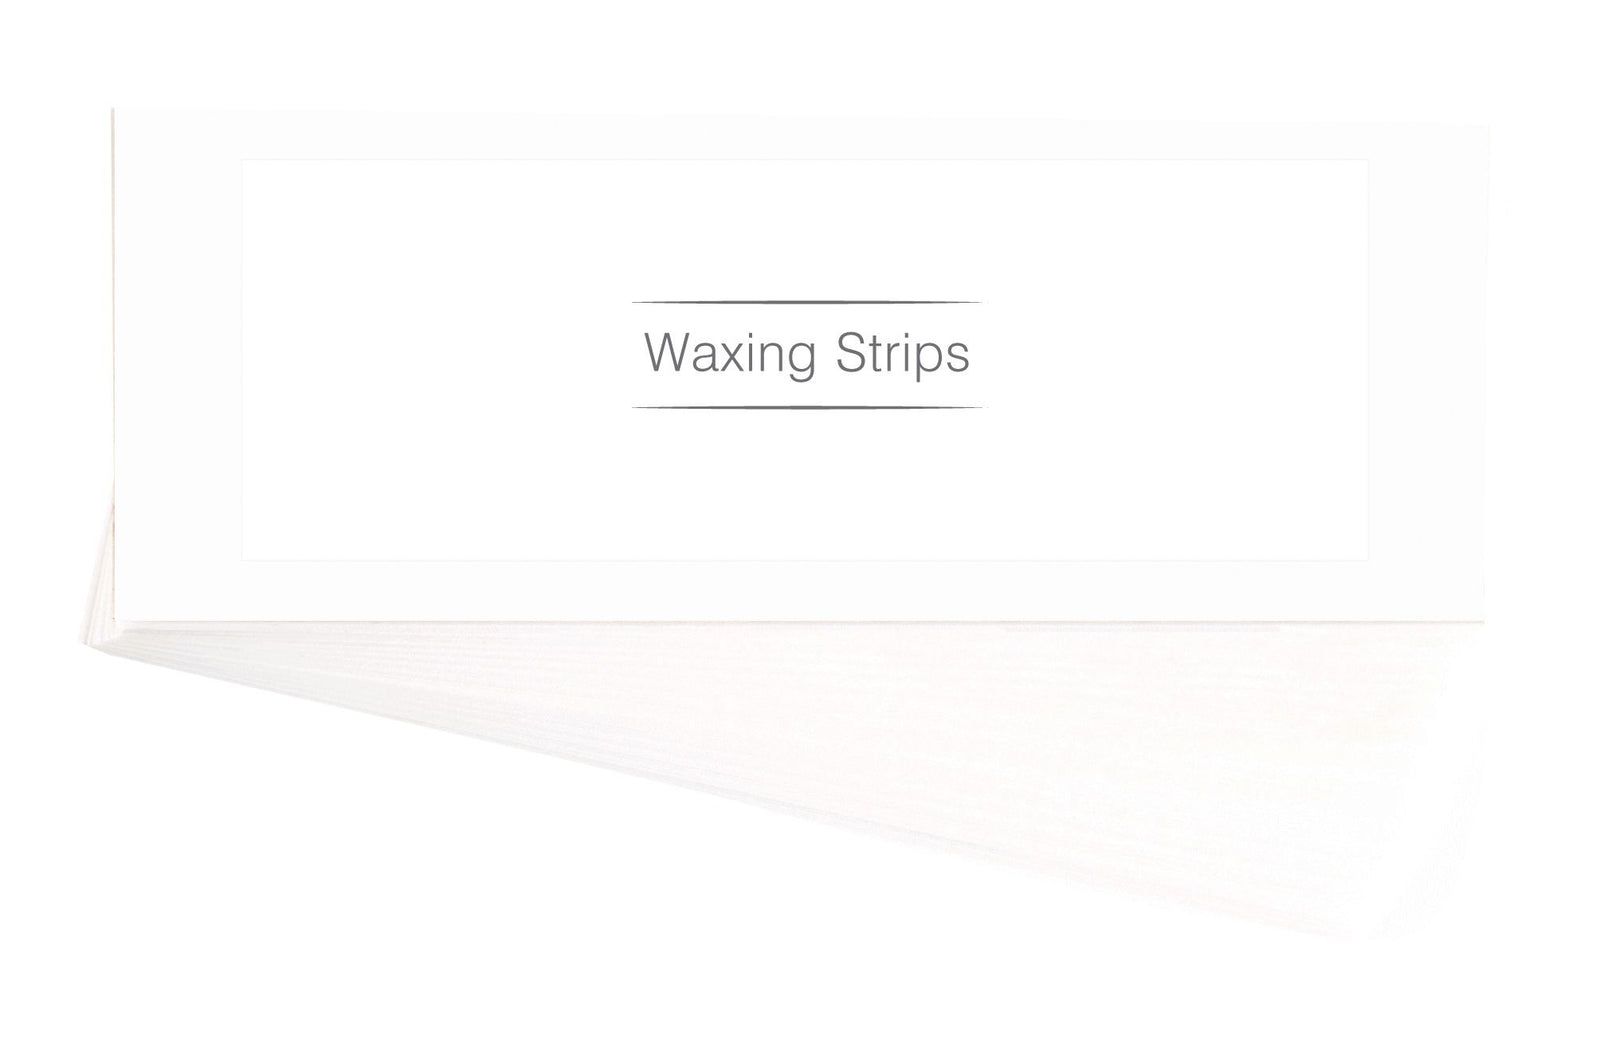 waxing strips for Total Body Waxing, Rio Wax Heater and Roller Waxer